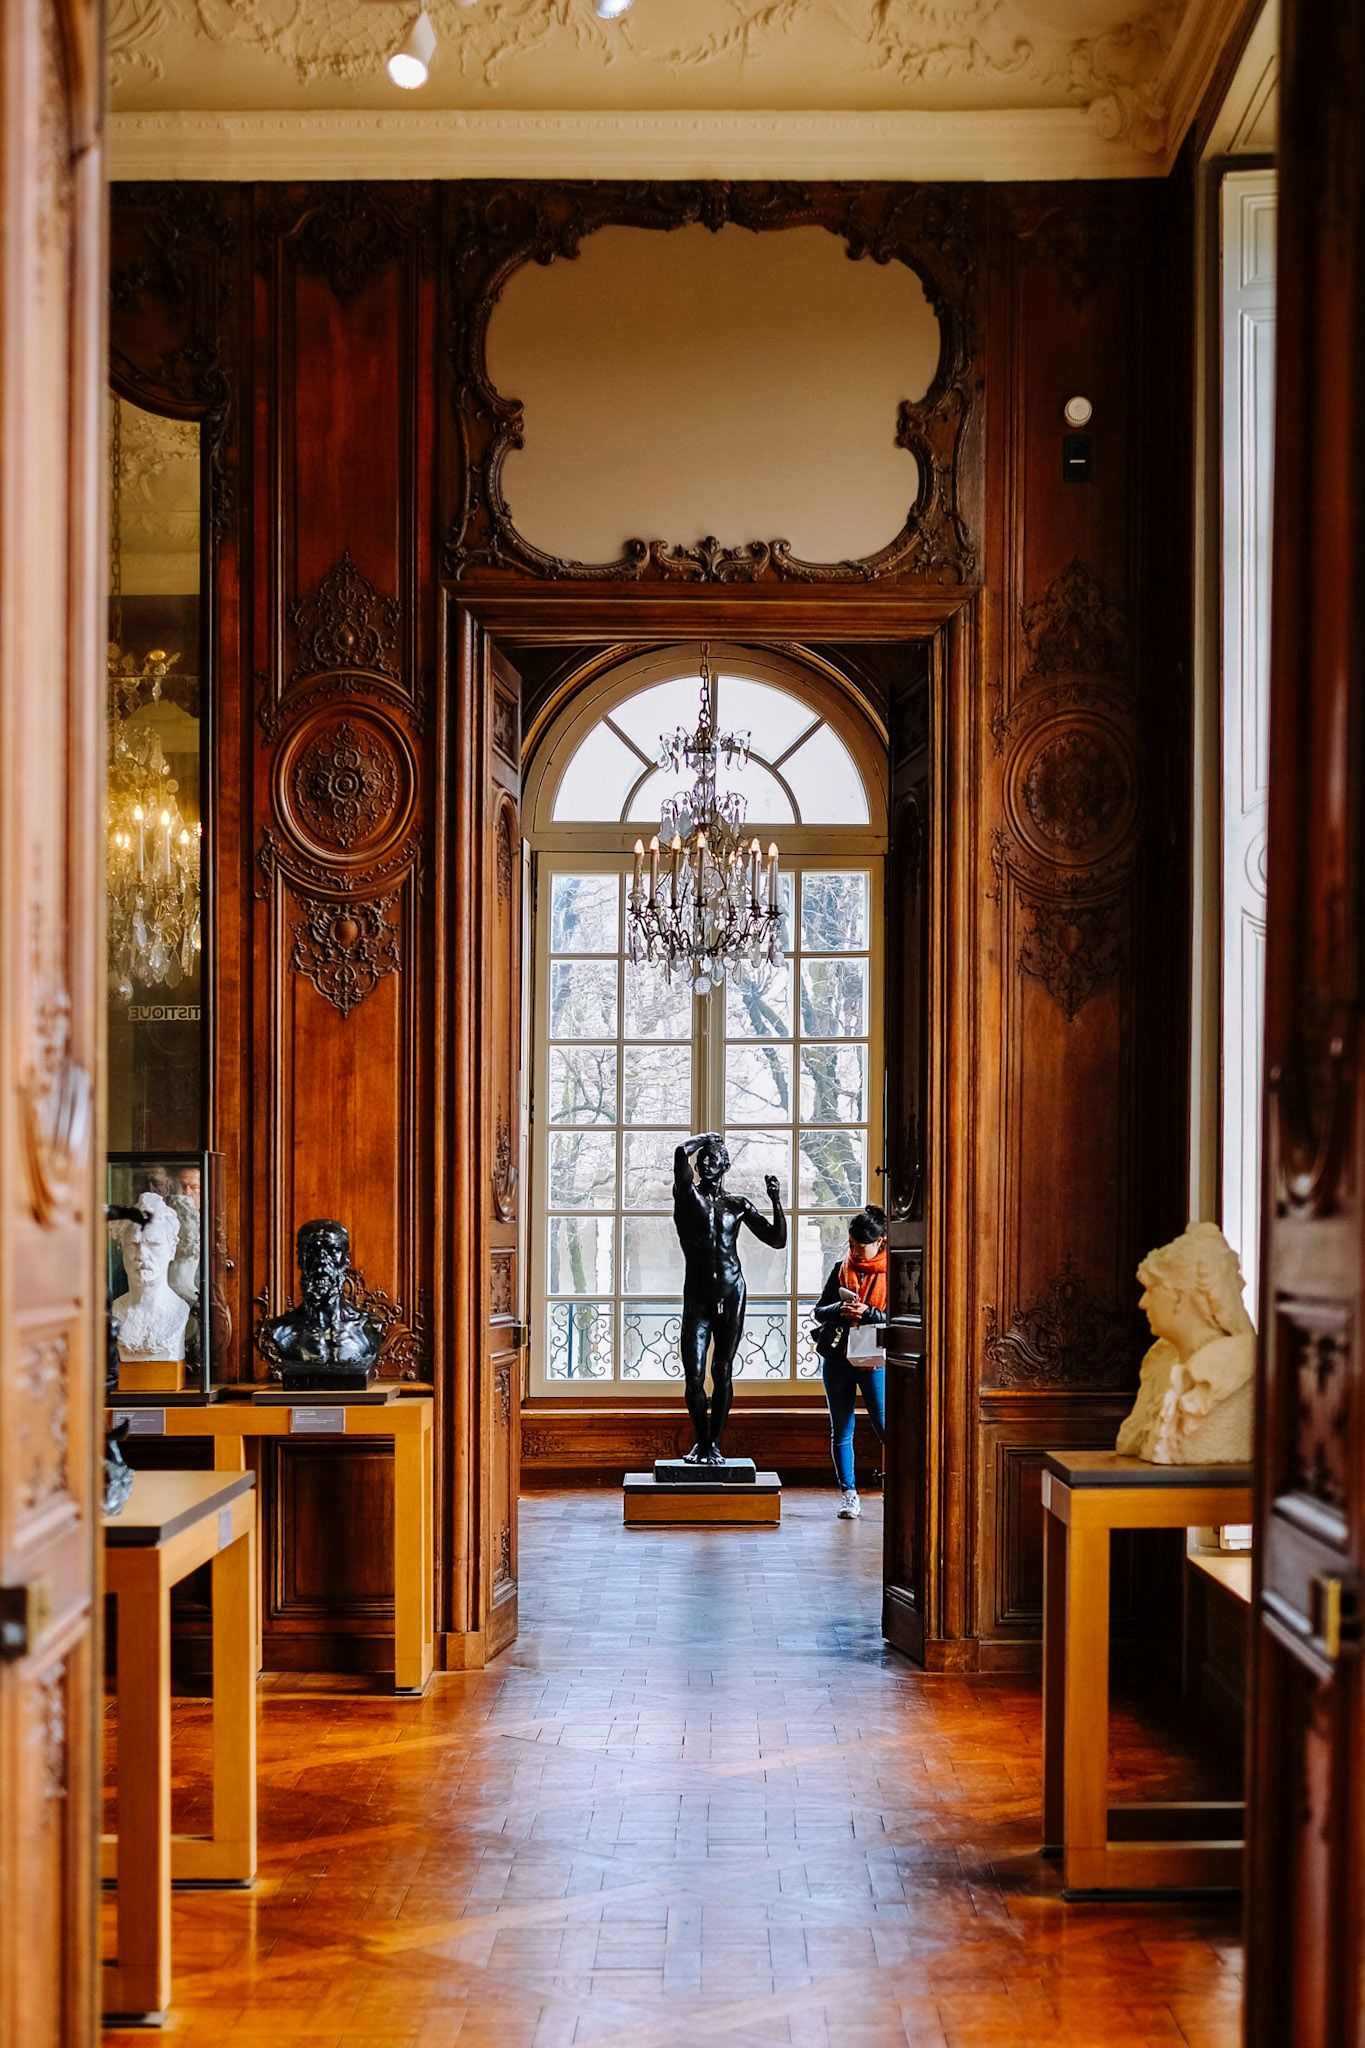 Hotel Biron interior at the Rodin Museum